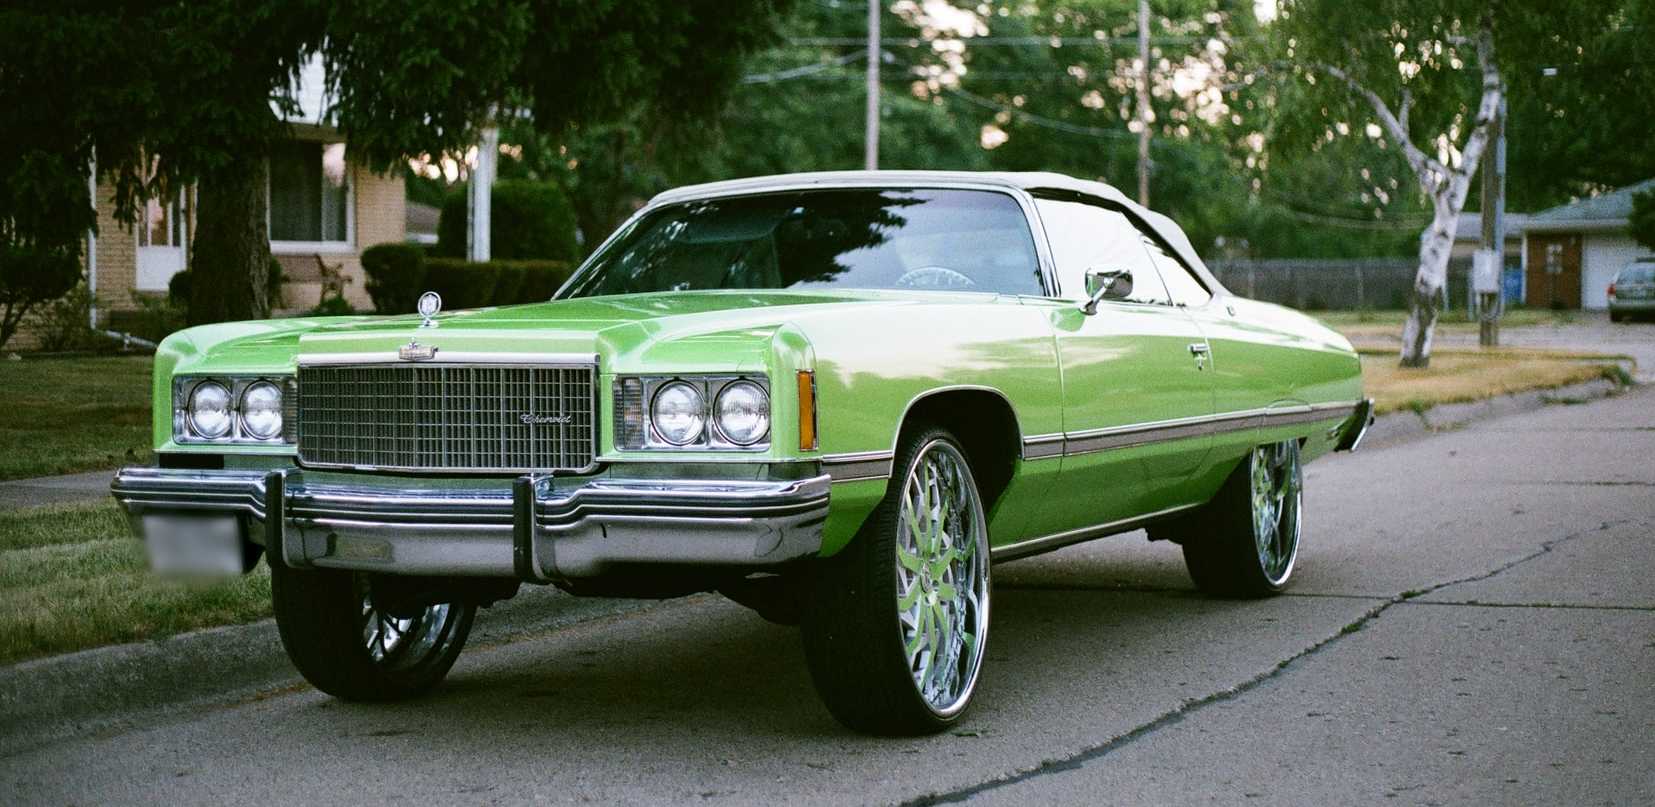 Green Classic Car in Detroit, Michigan | Kids Car Donations